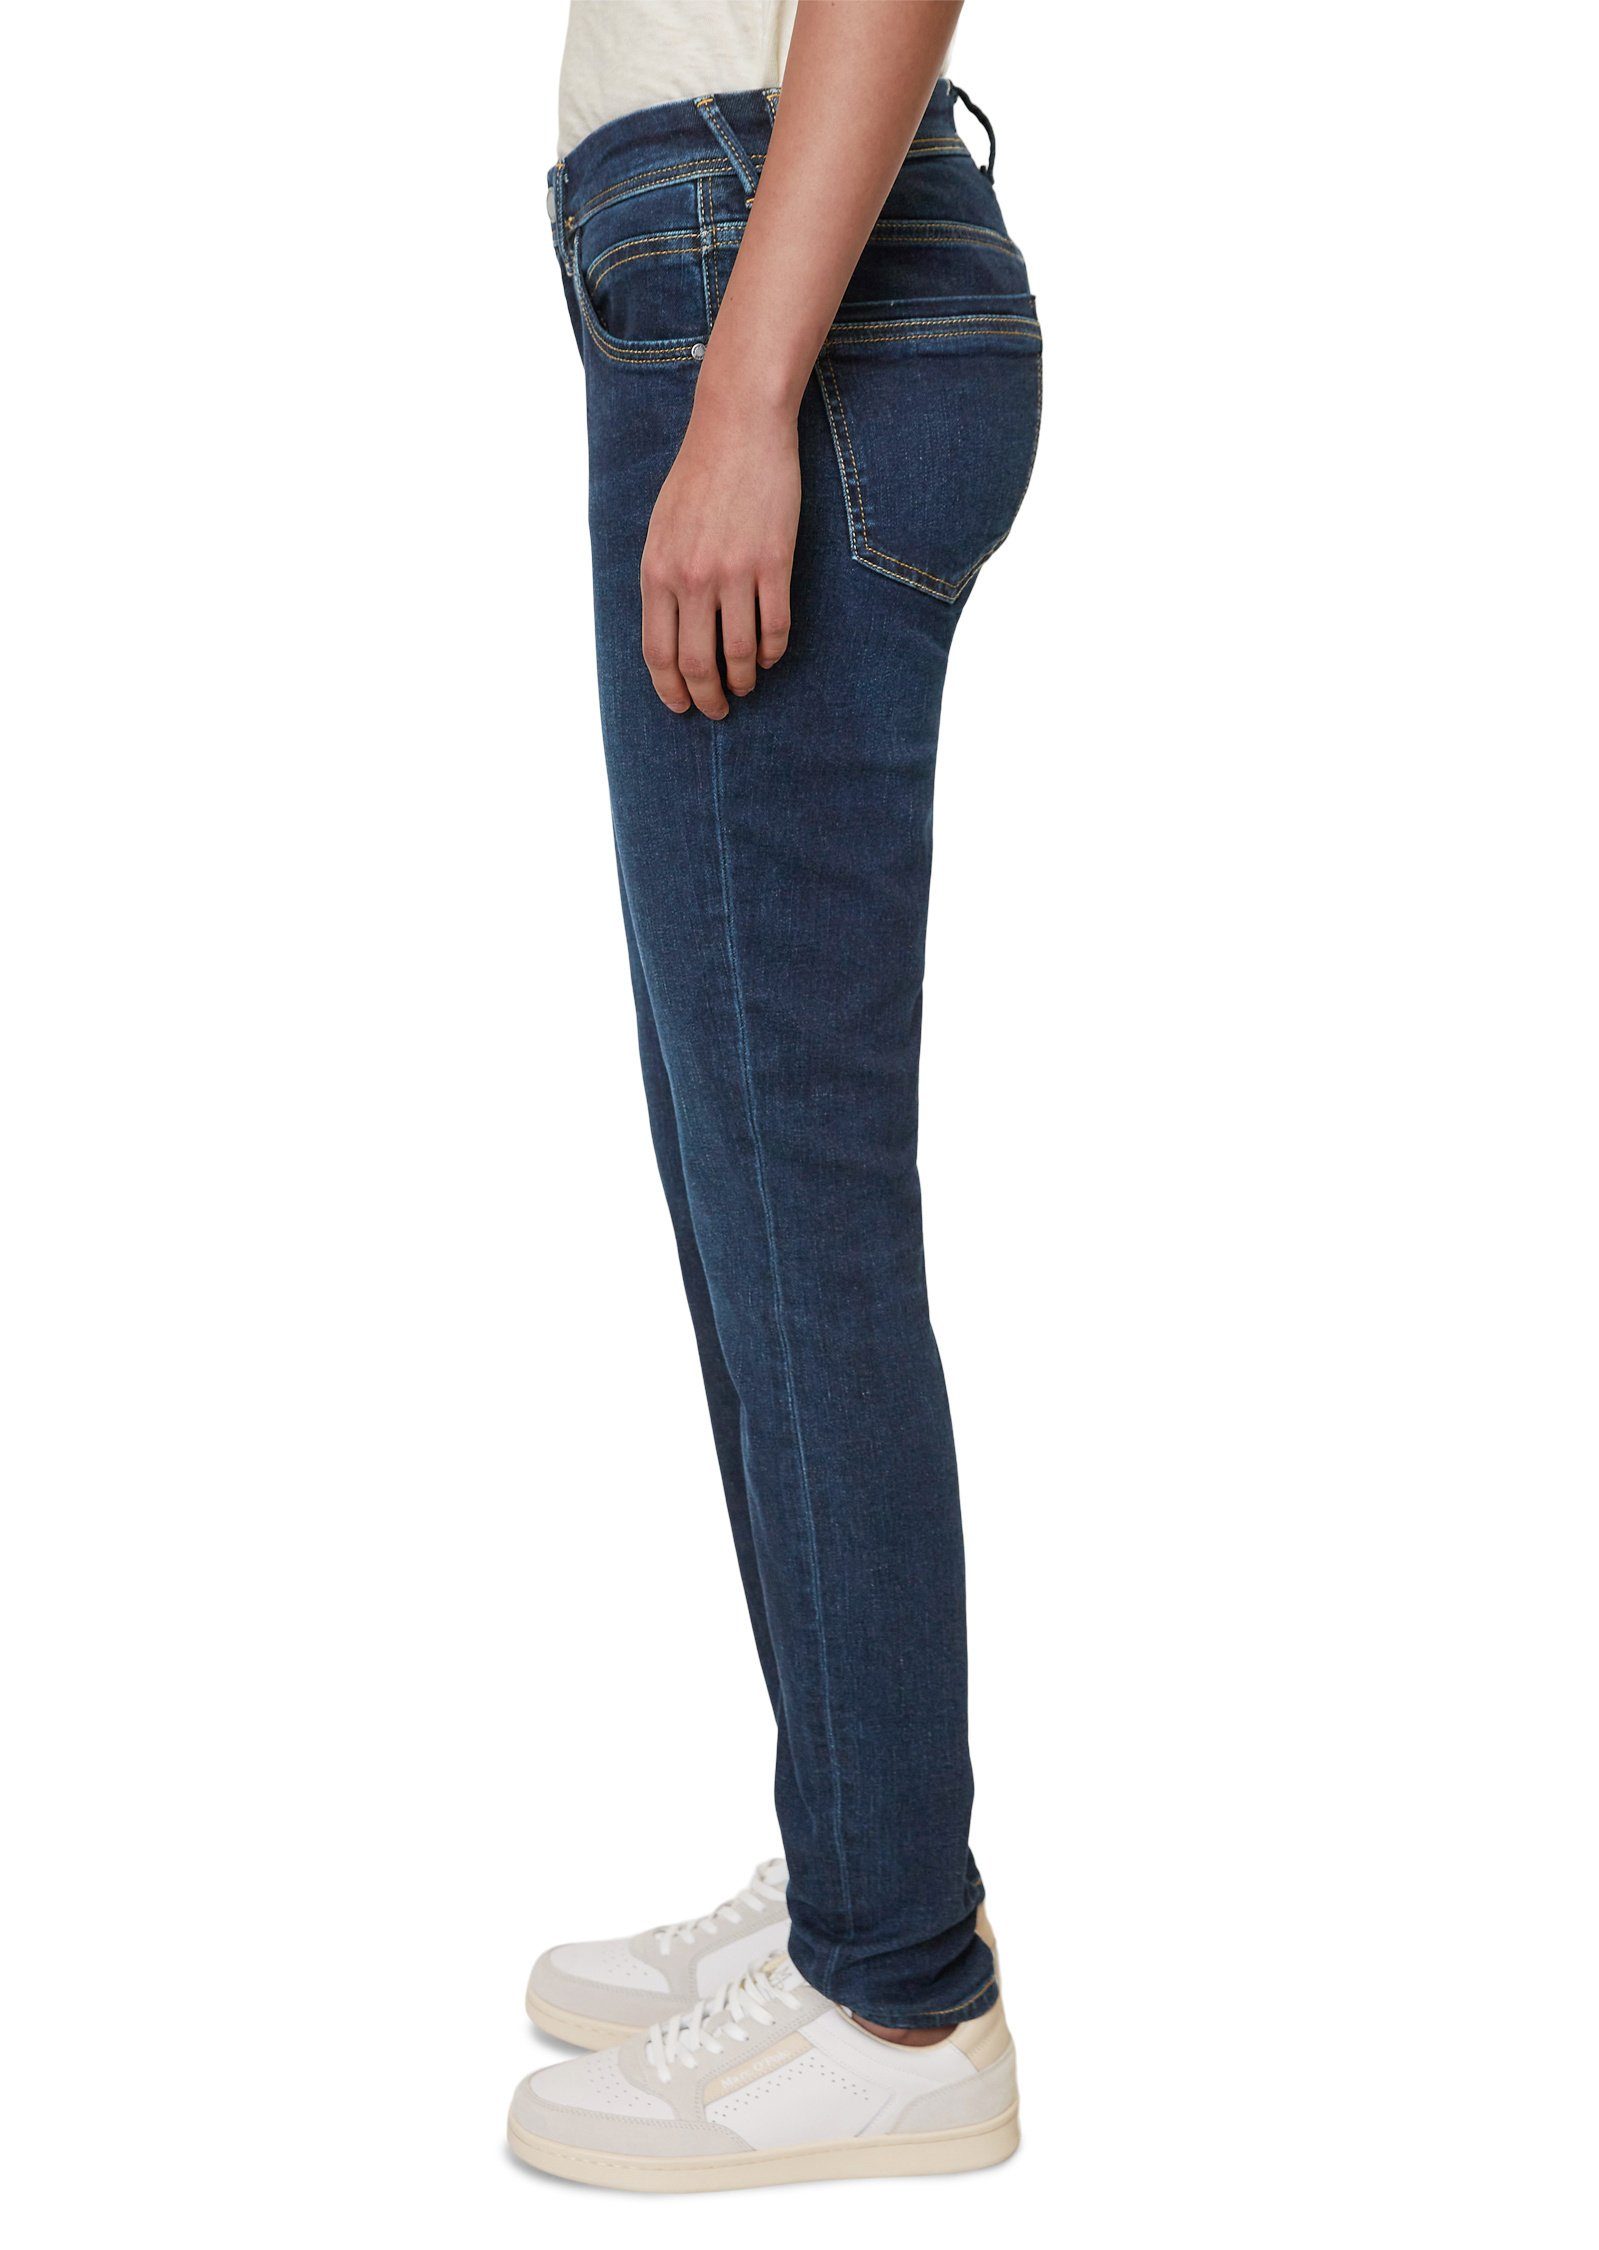 Slim-fit-Jeans aus Cotton-Mix Marc Organic DENIM O'Polo